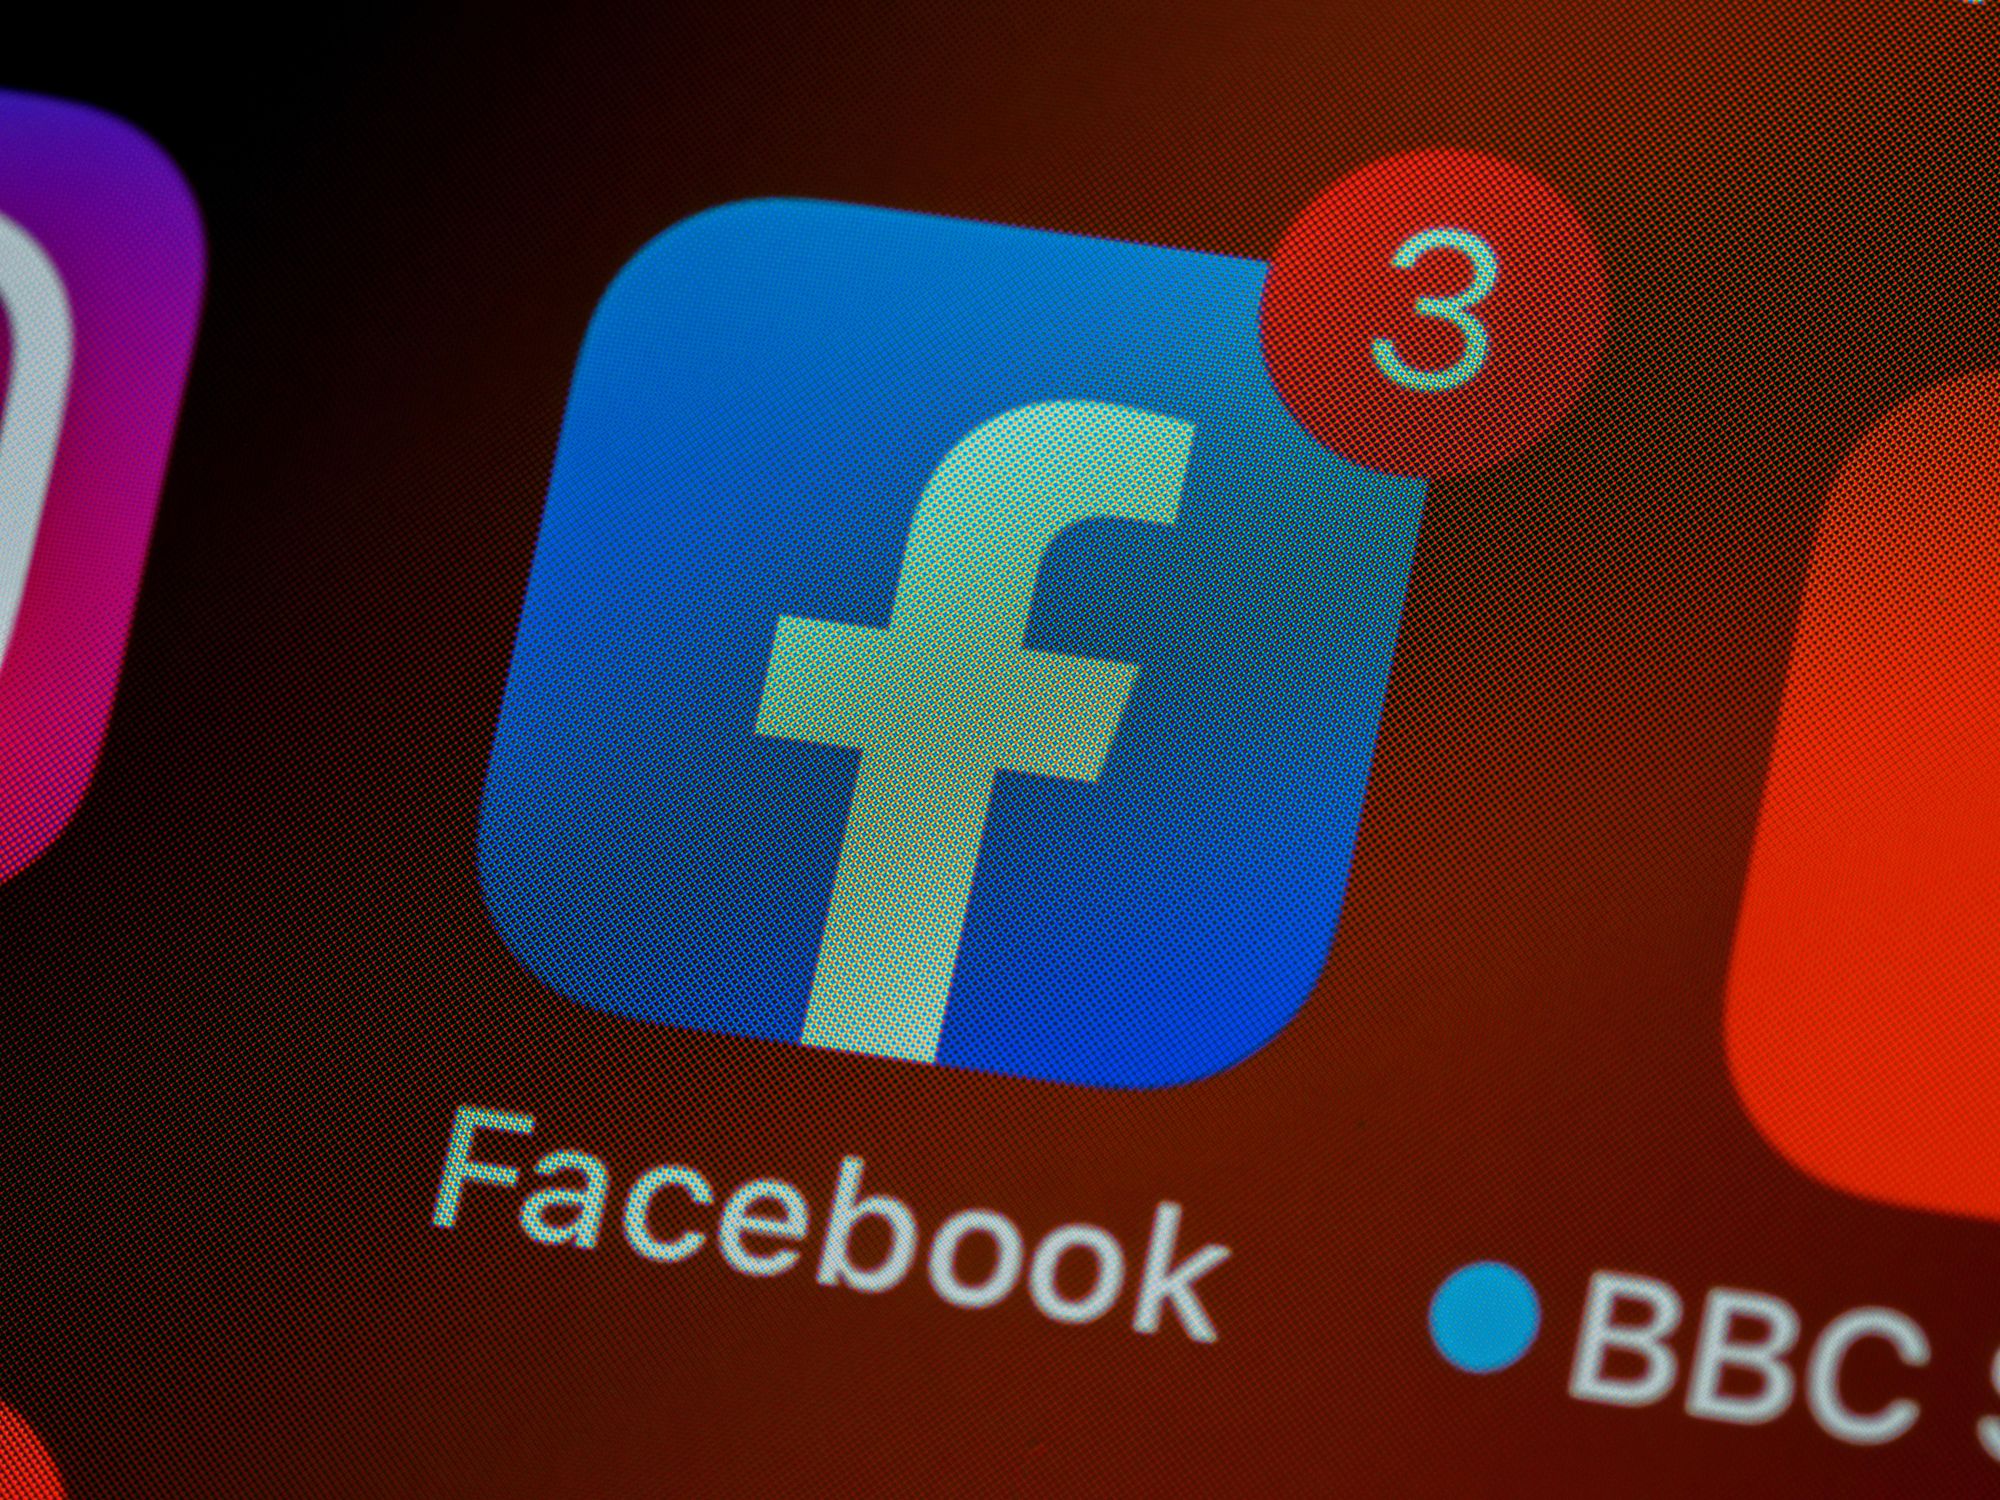 Facebook Fails to Stop Spanish-Language Misinformation, Advocates Say